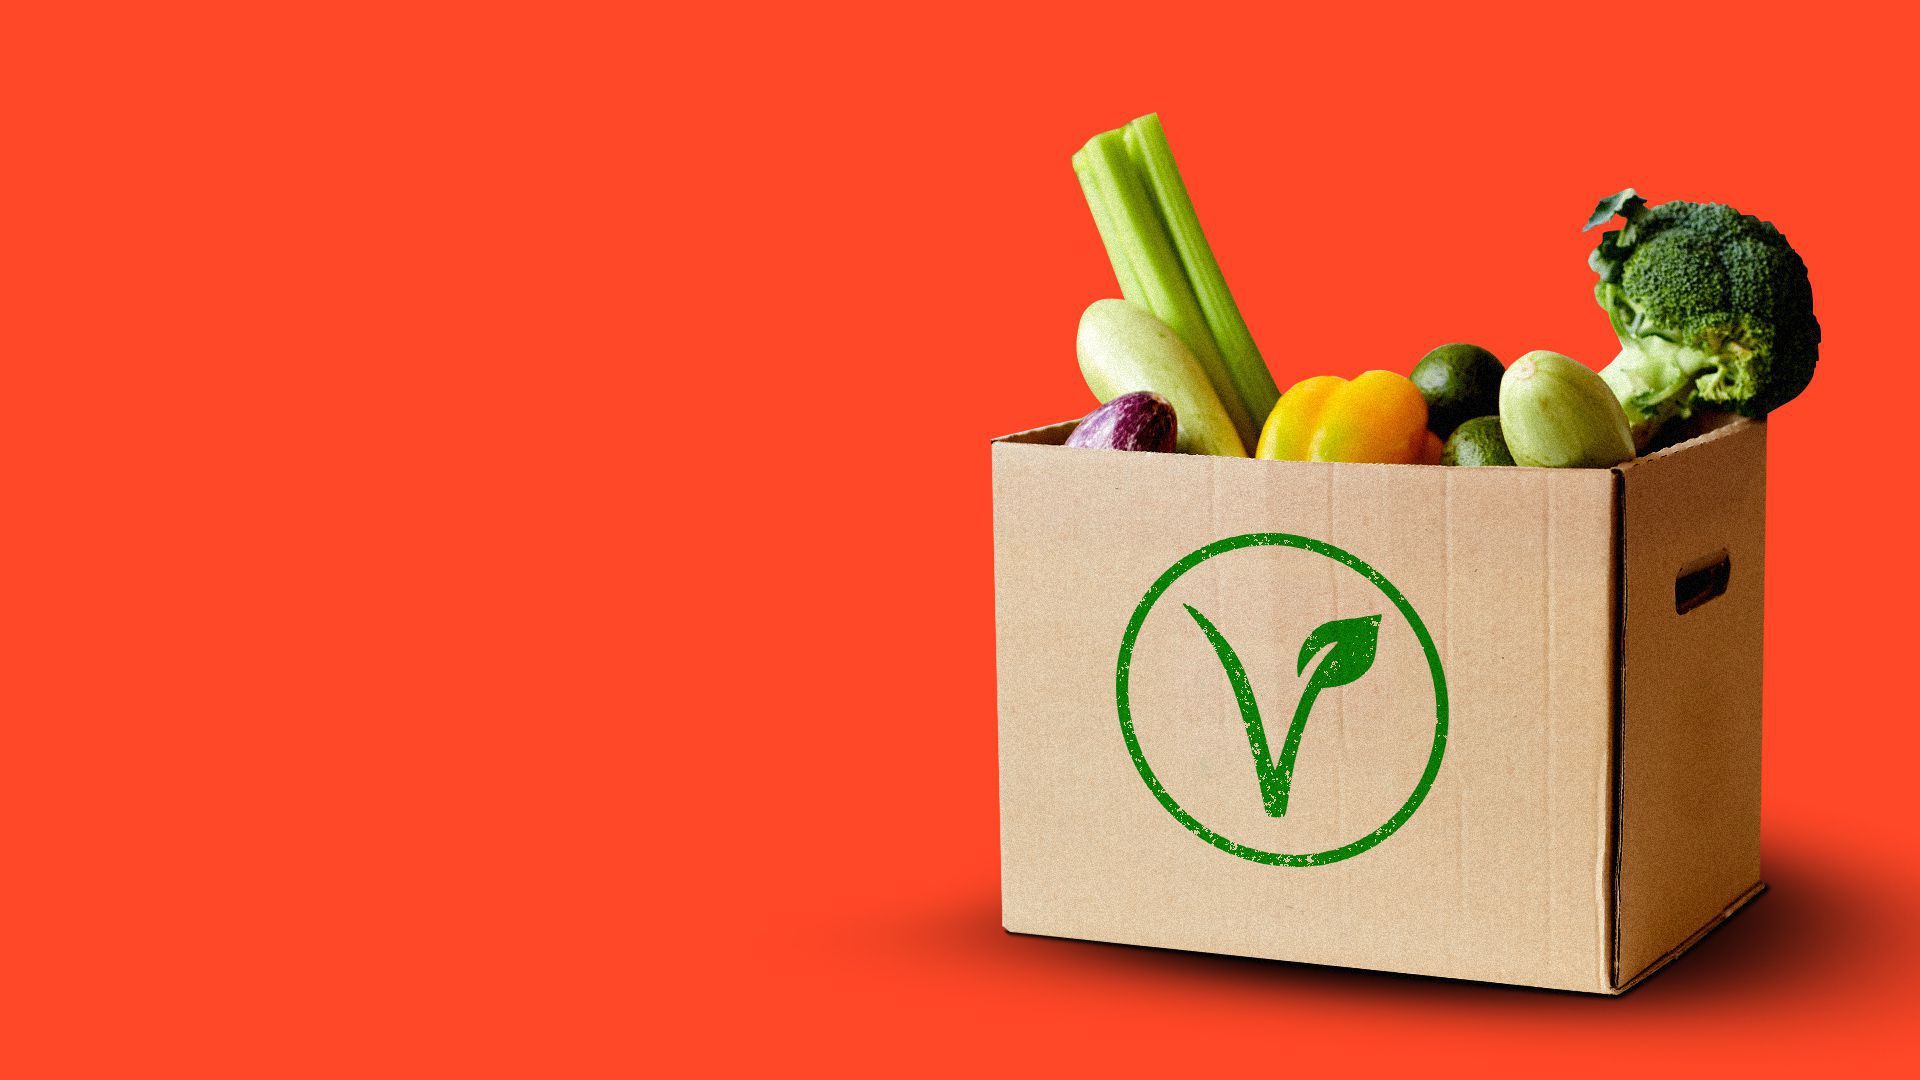 Illustration of box with vegan foods